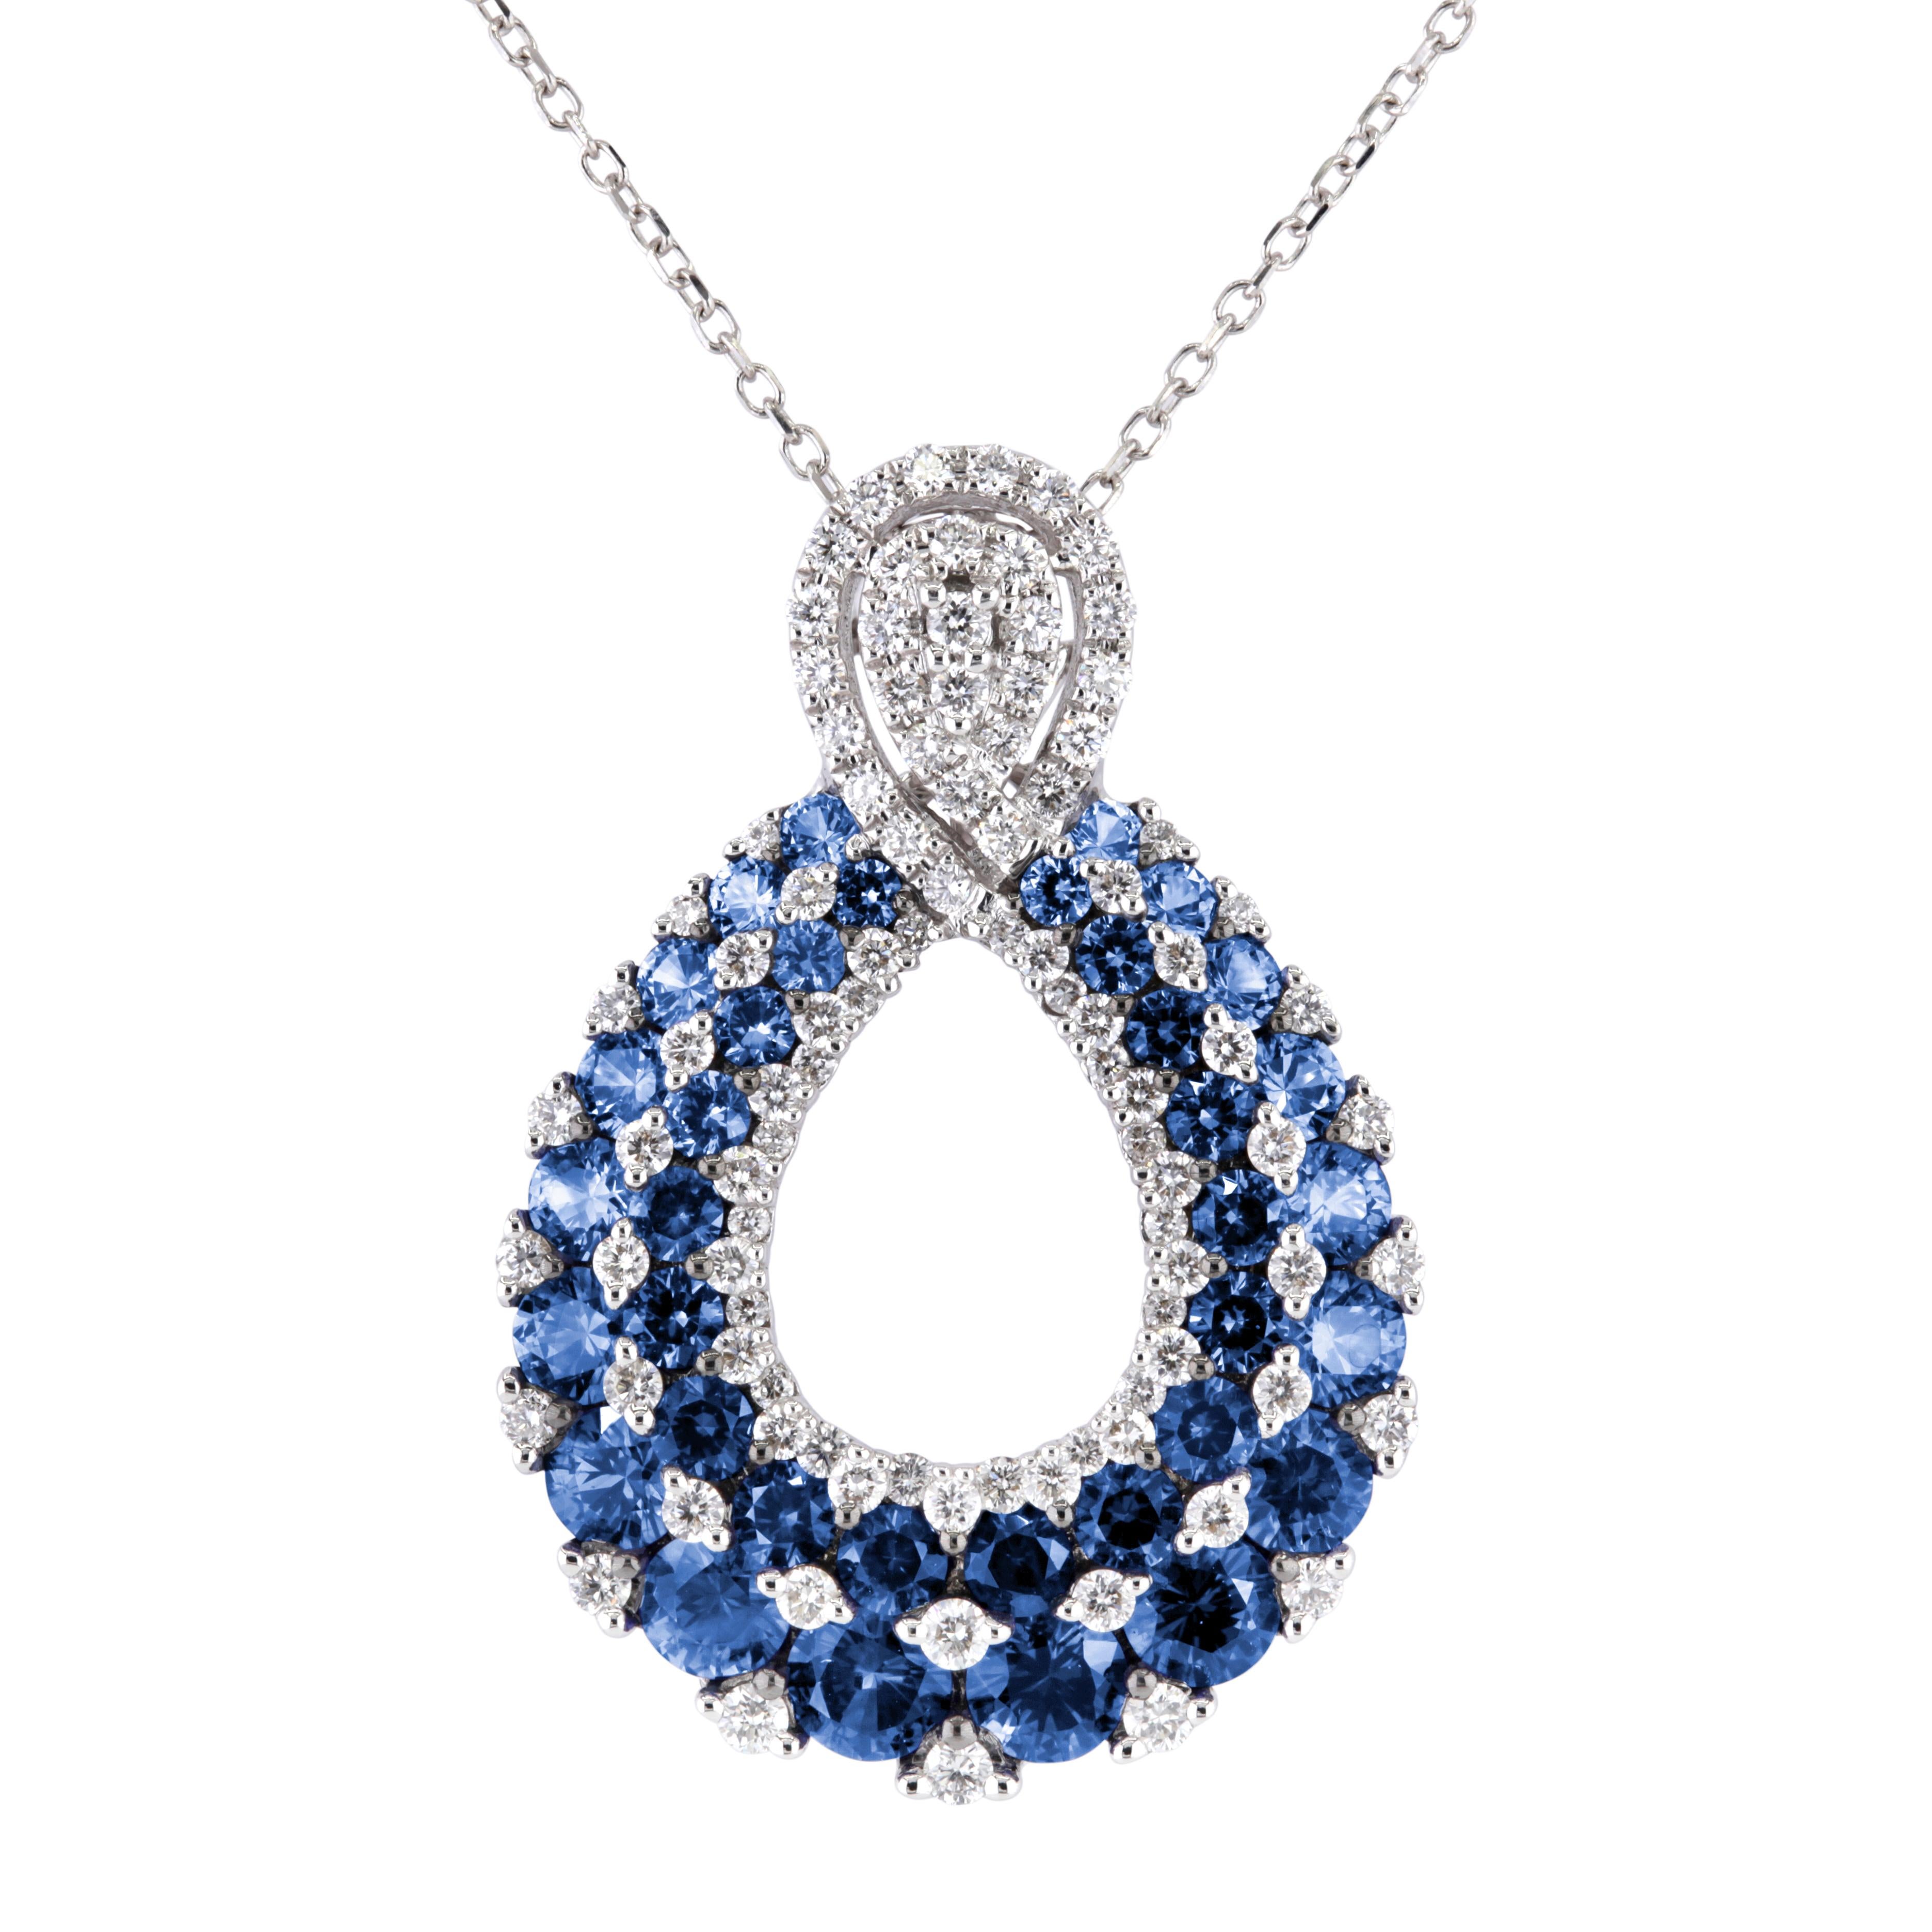 Contemporary 2.20 Carat Vivid Blue Sapphire and 0.52 Carat Diamond Peacock Pendant ref2185 For Sale